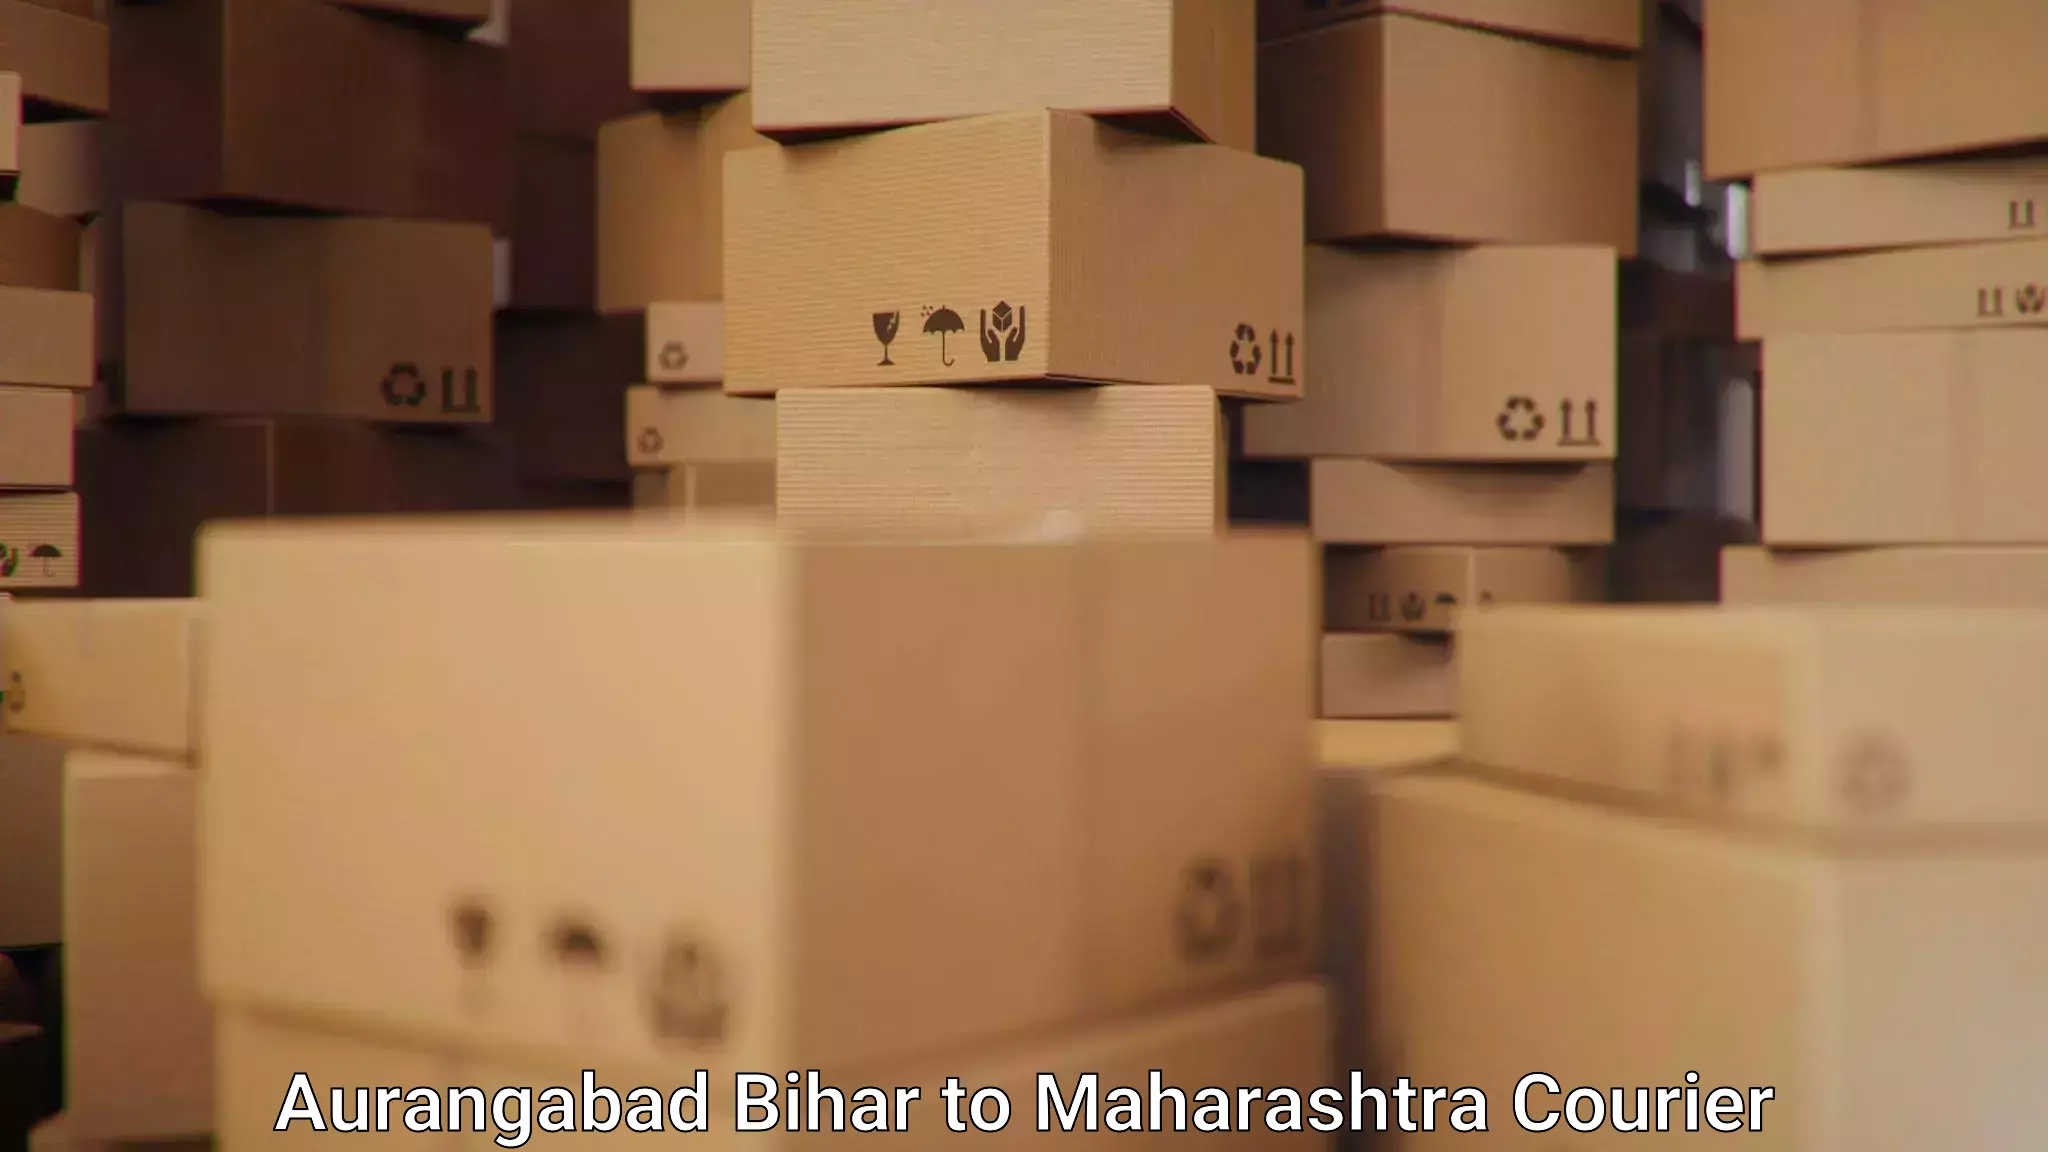 Shipping and handling Aurangabad Bihar to Navi Mumbai